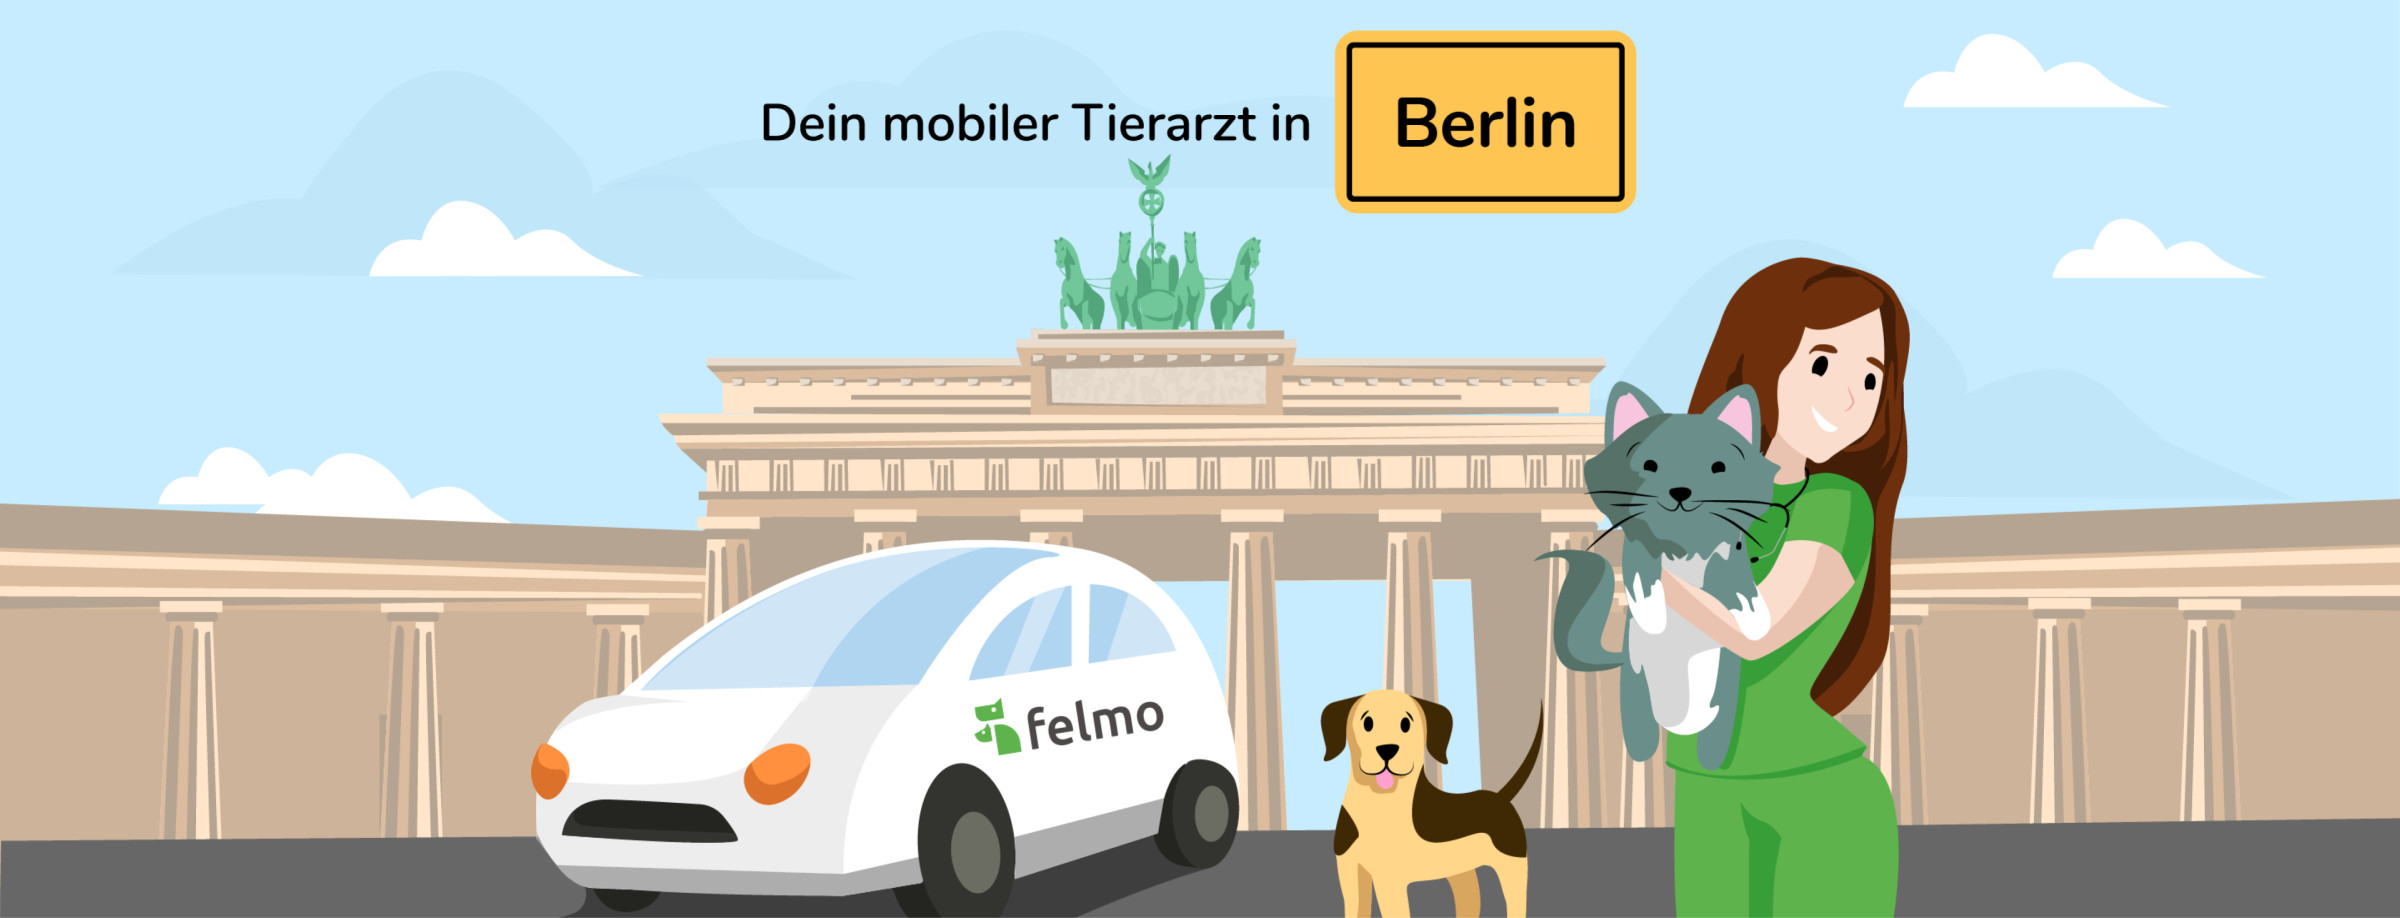 felmo Banner Berlin desktop